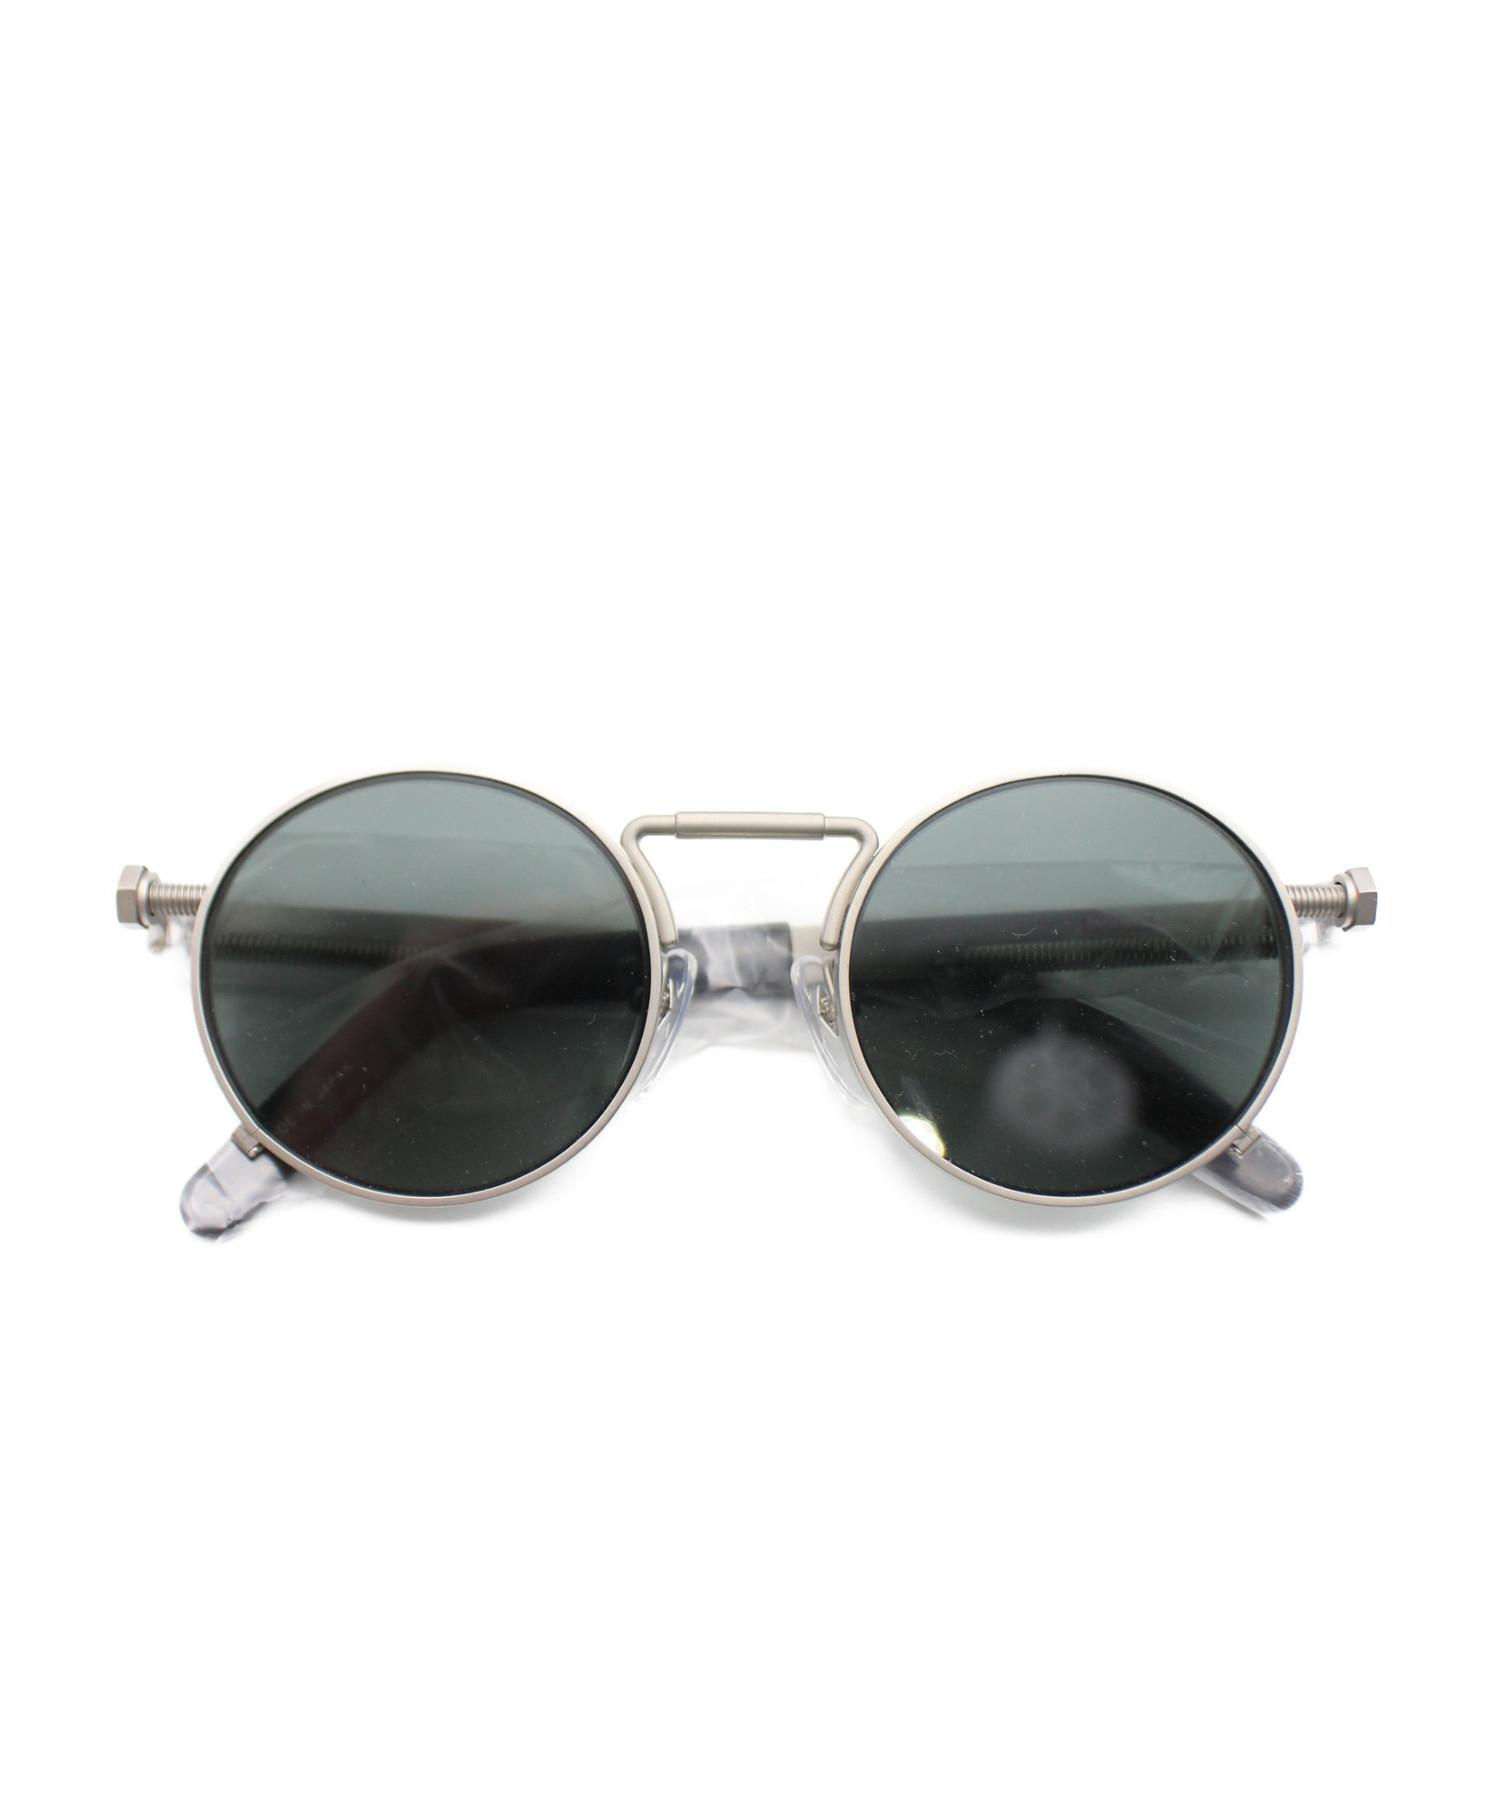 Supreme x jean paul gaultier (シュプリーム x ジャンポールゴルチエ) 19SS Sunglasses シルバー